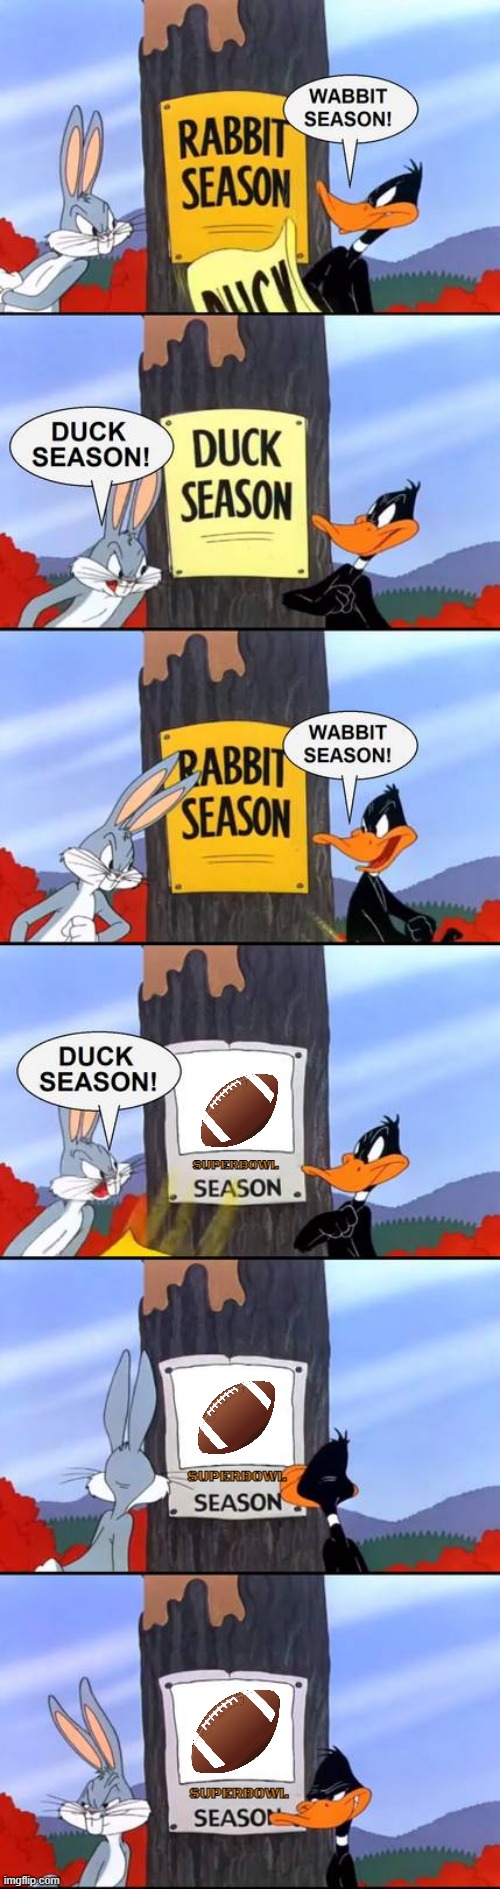 superbowl season | SUPERBOWL; SUPERBOWL; SUPERBOWL | image tagged in wabbit season duck season elmer season,superbowl,football,sports | made w/ Imgflip meme maker